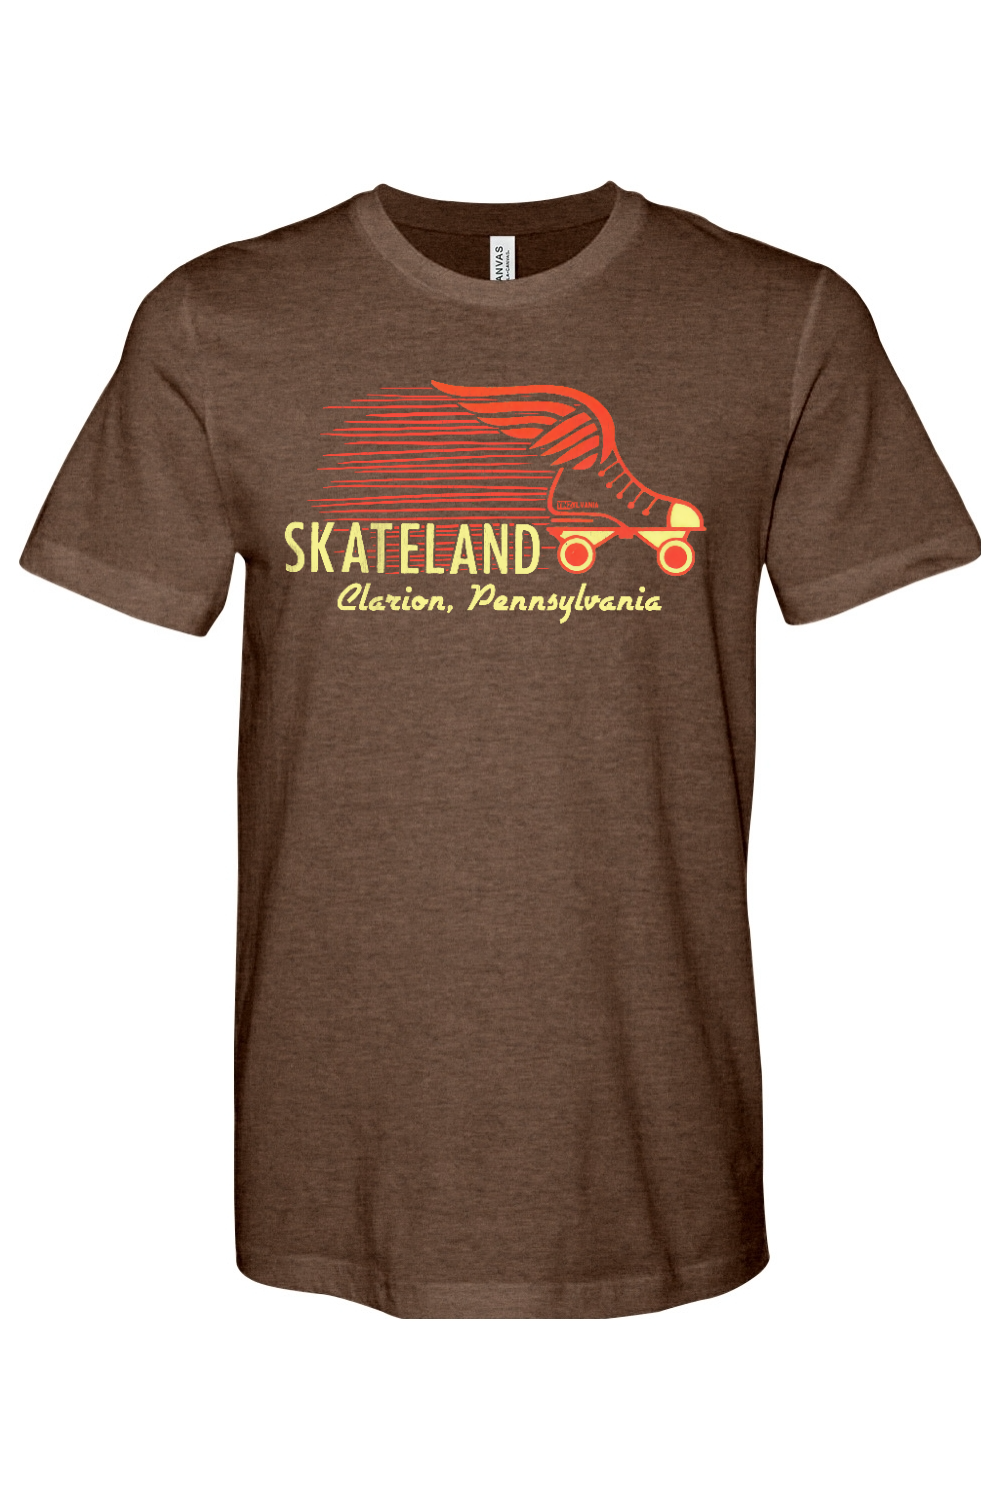 Skateland Roller Rink - Clarion - Yinzylvania